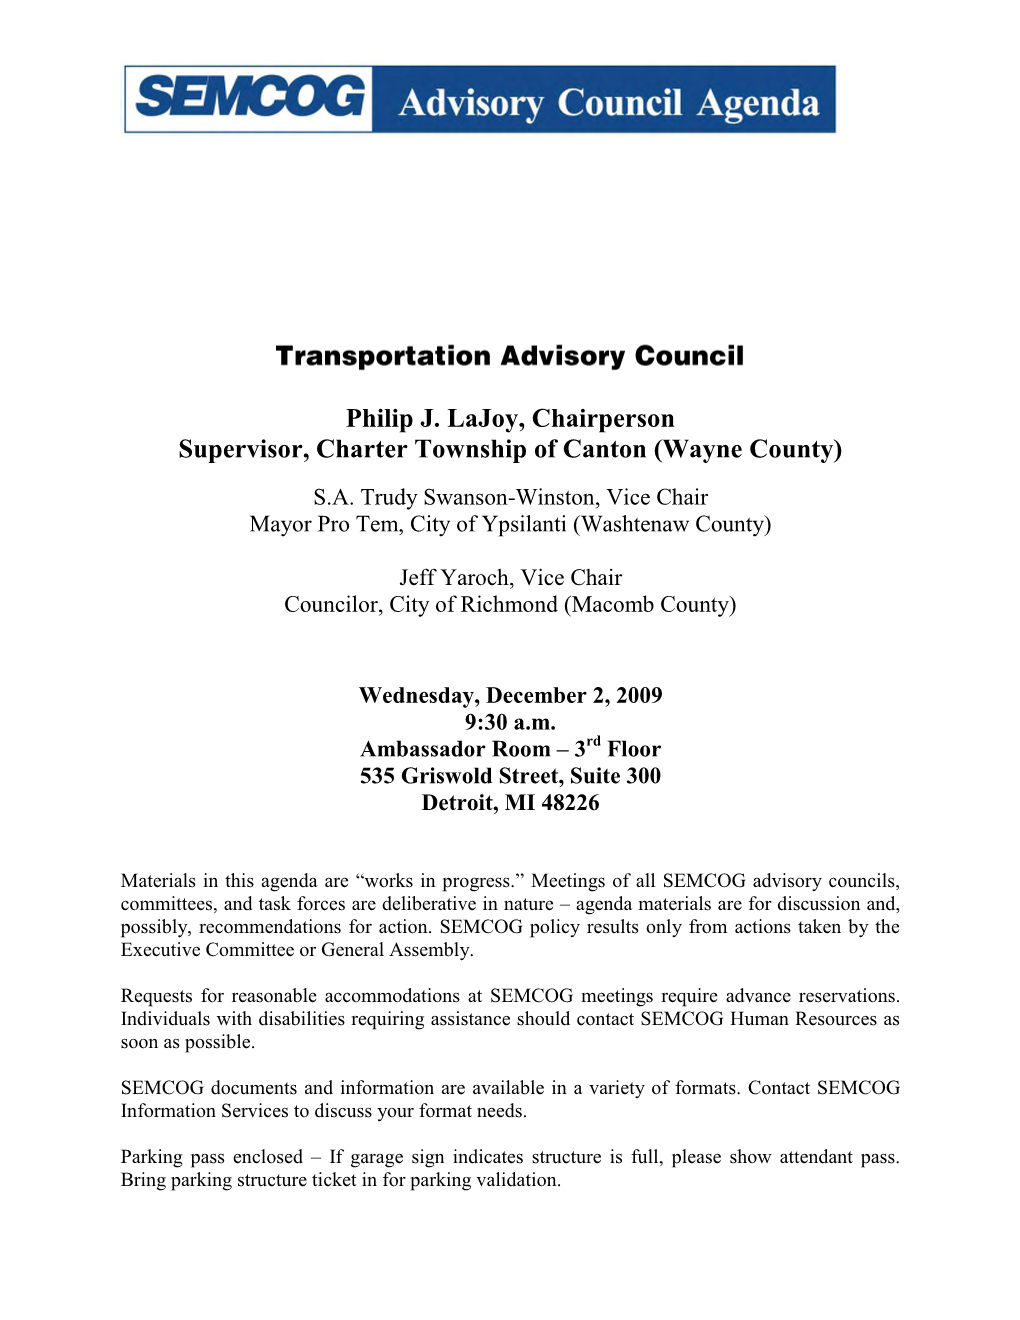 Transportation Advisory Council Agenda December 2009